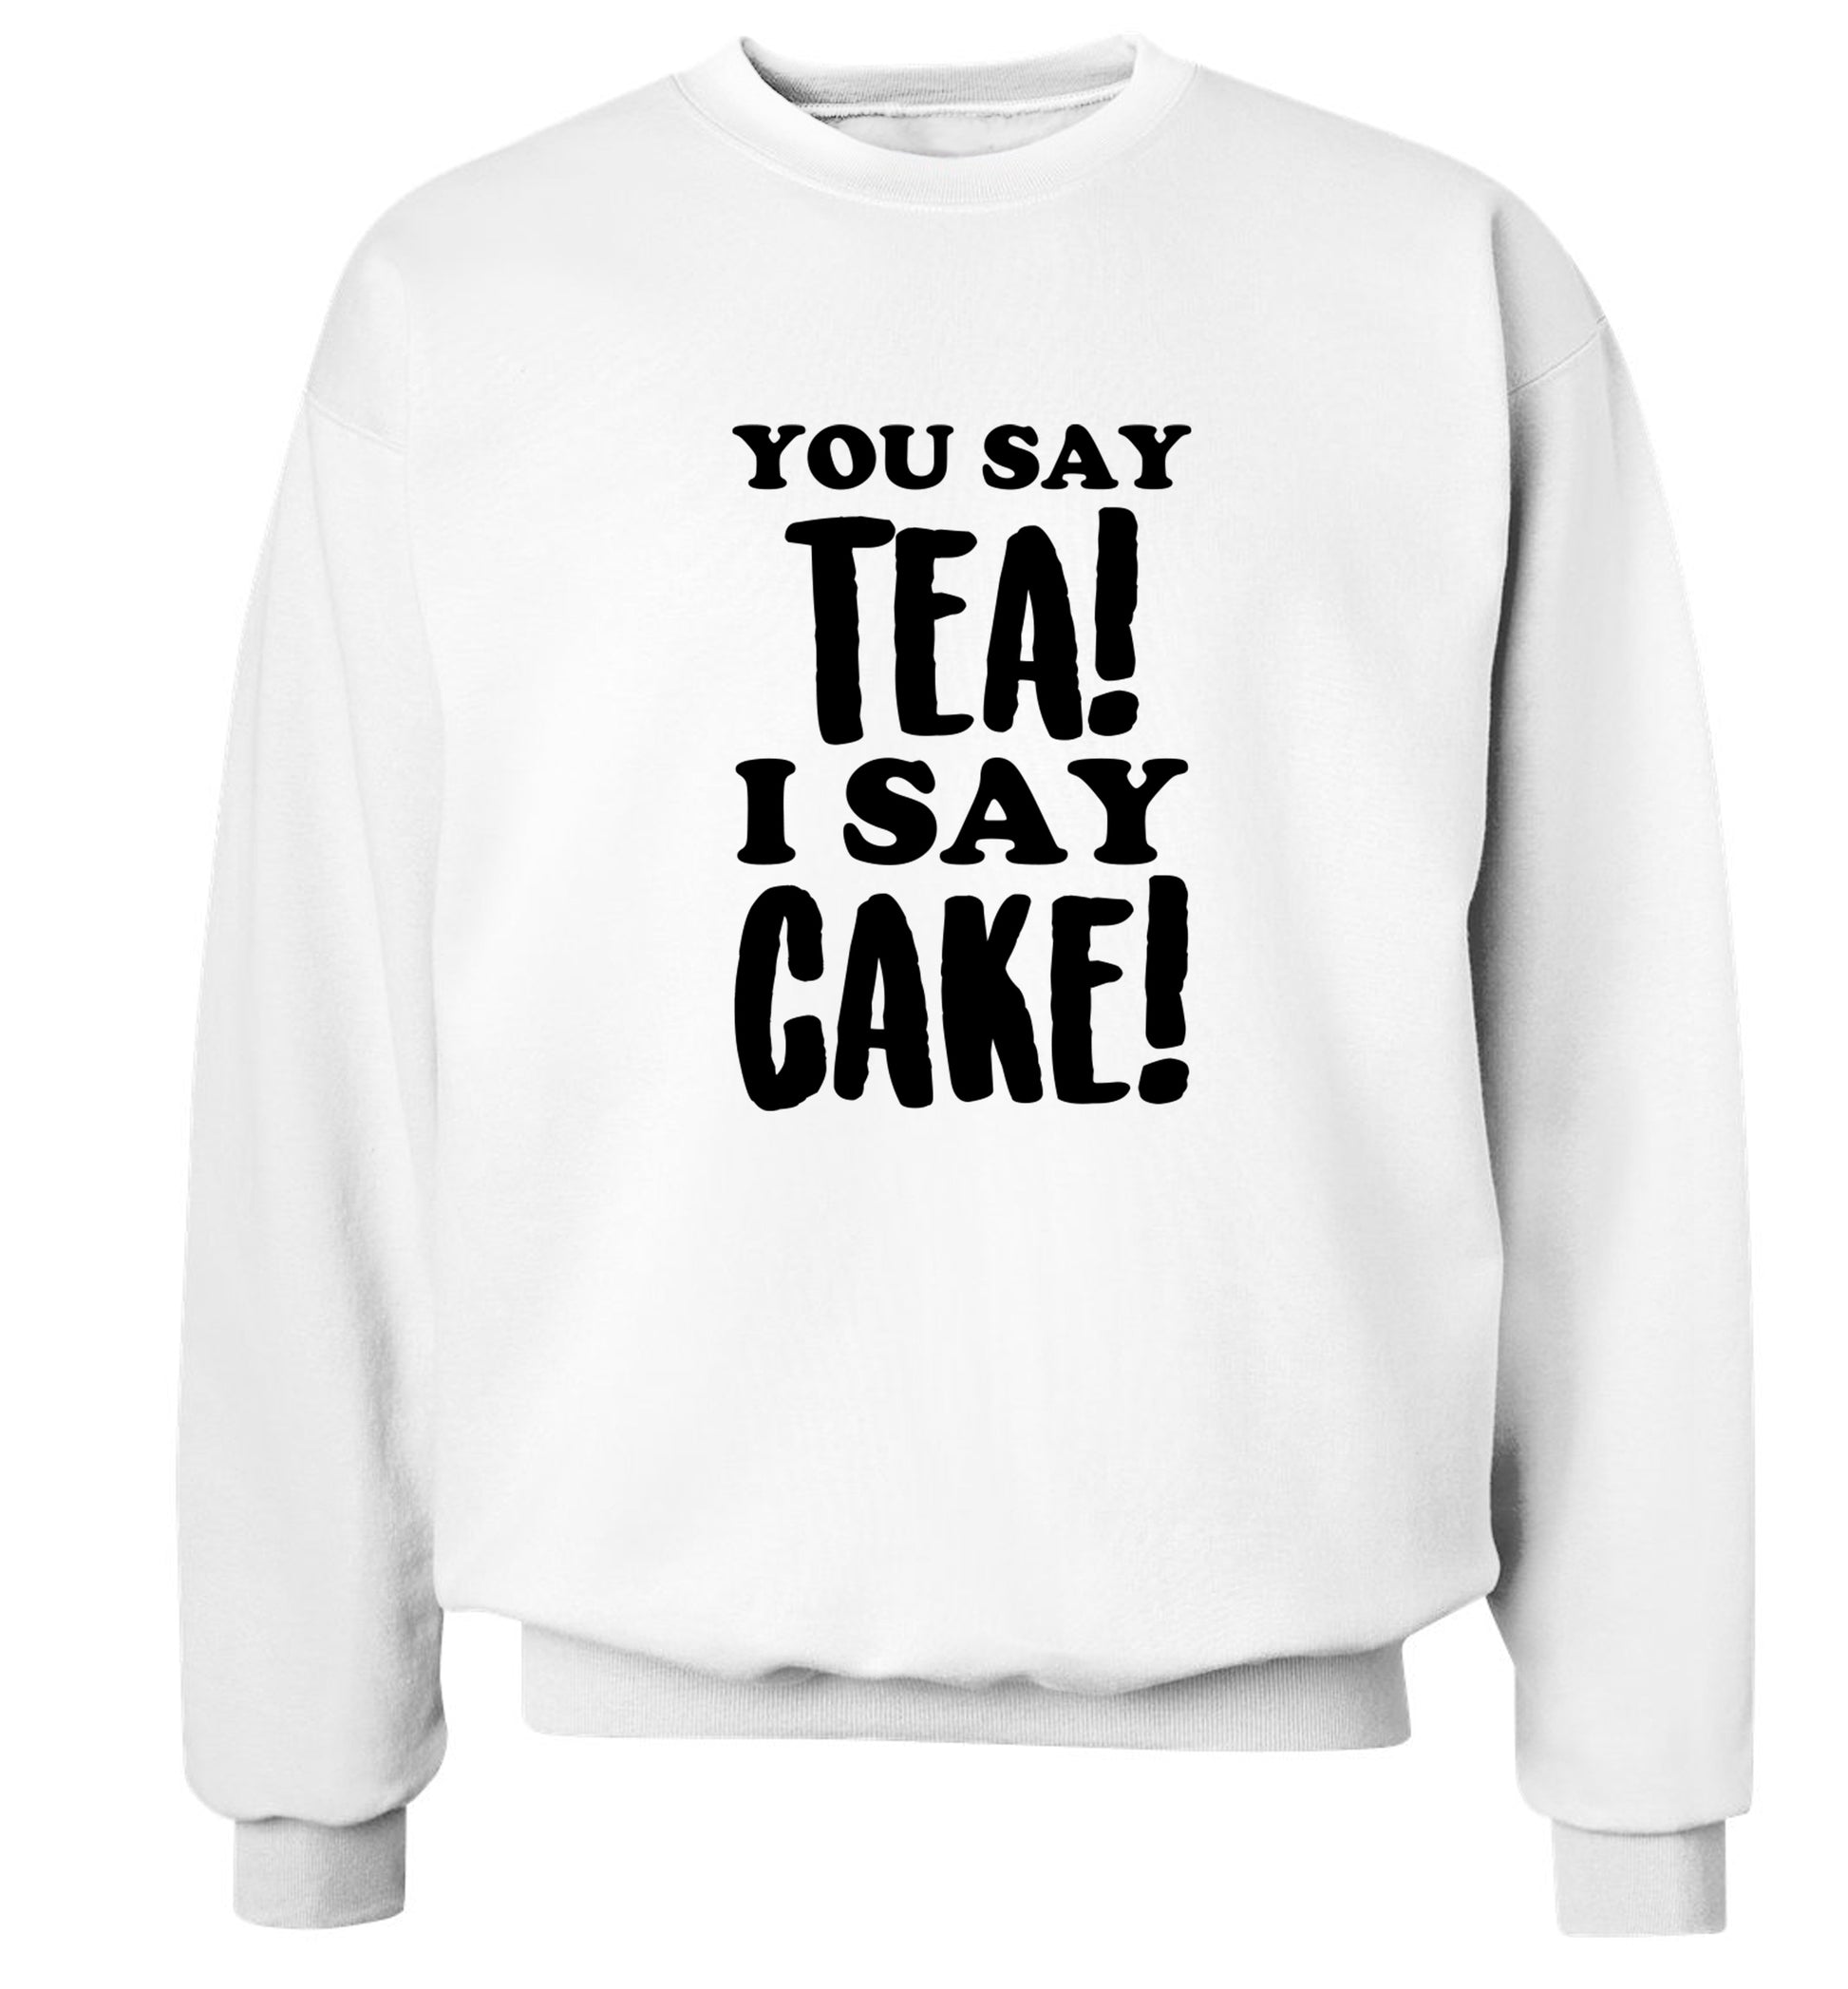 You say tea I say cake! Adult's unisex white Sweater 2XL